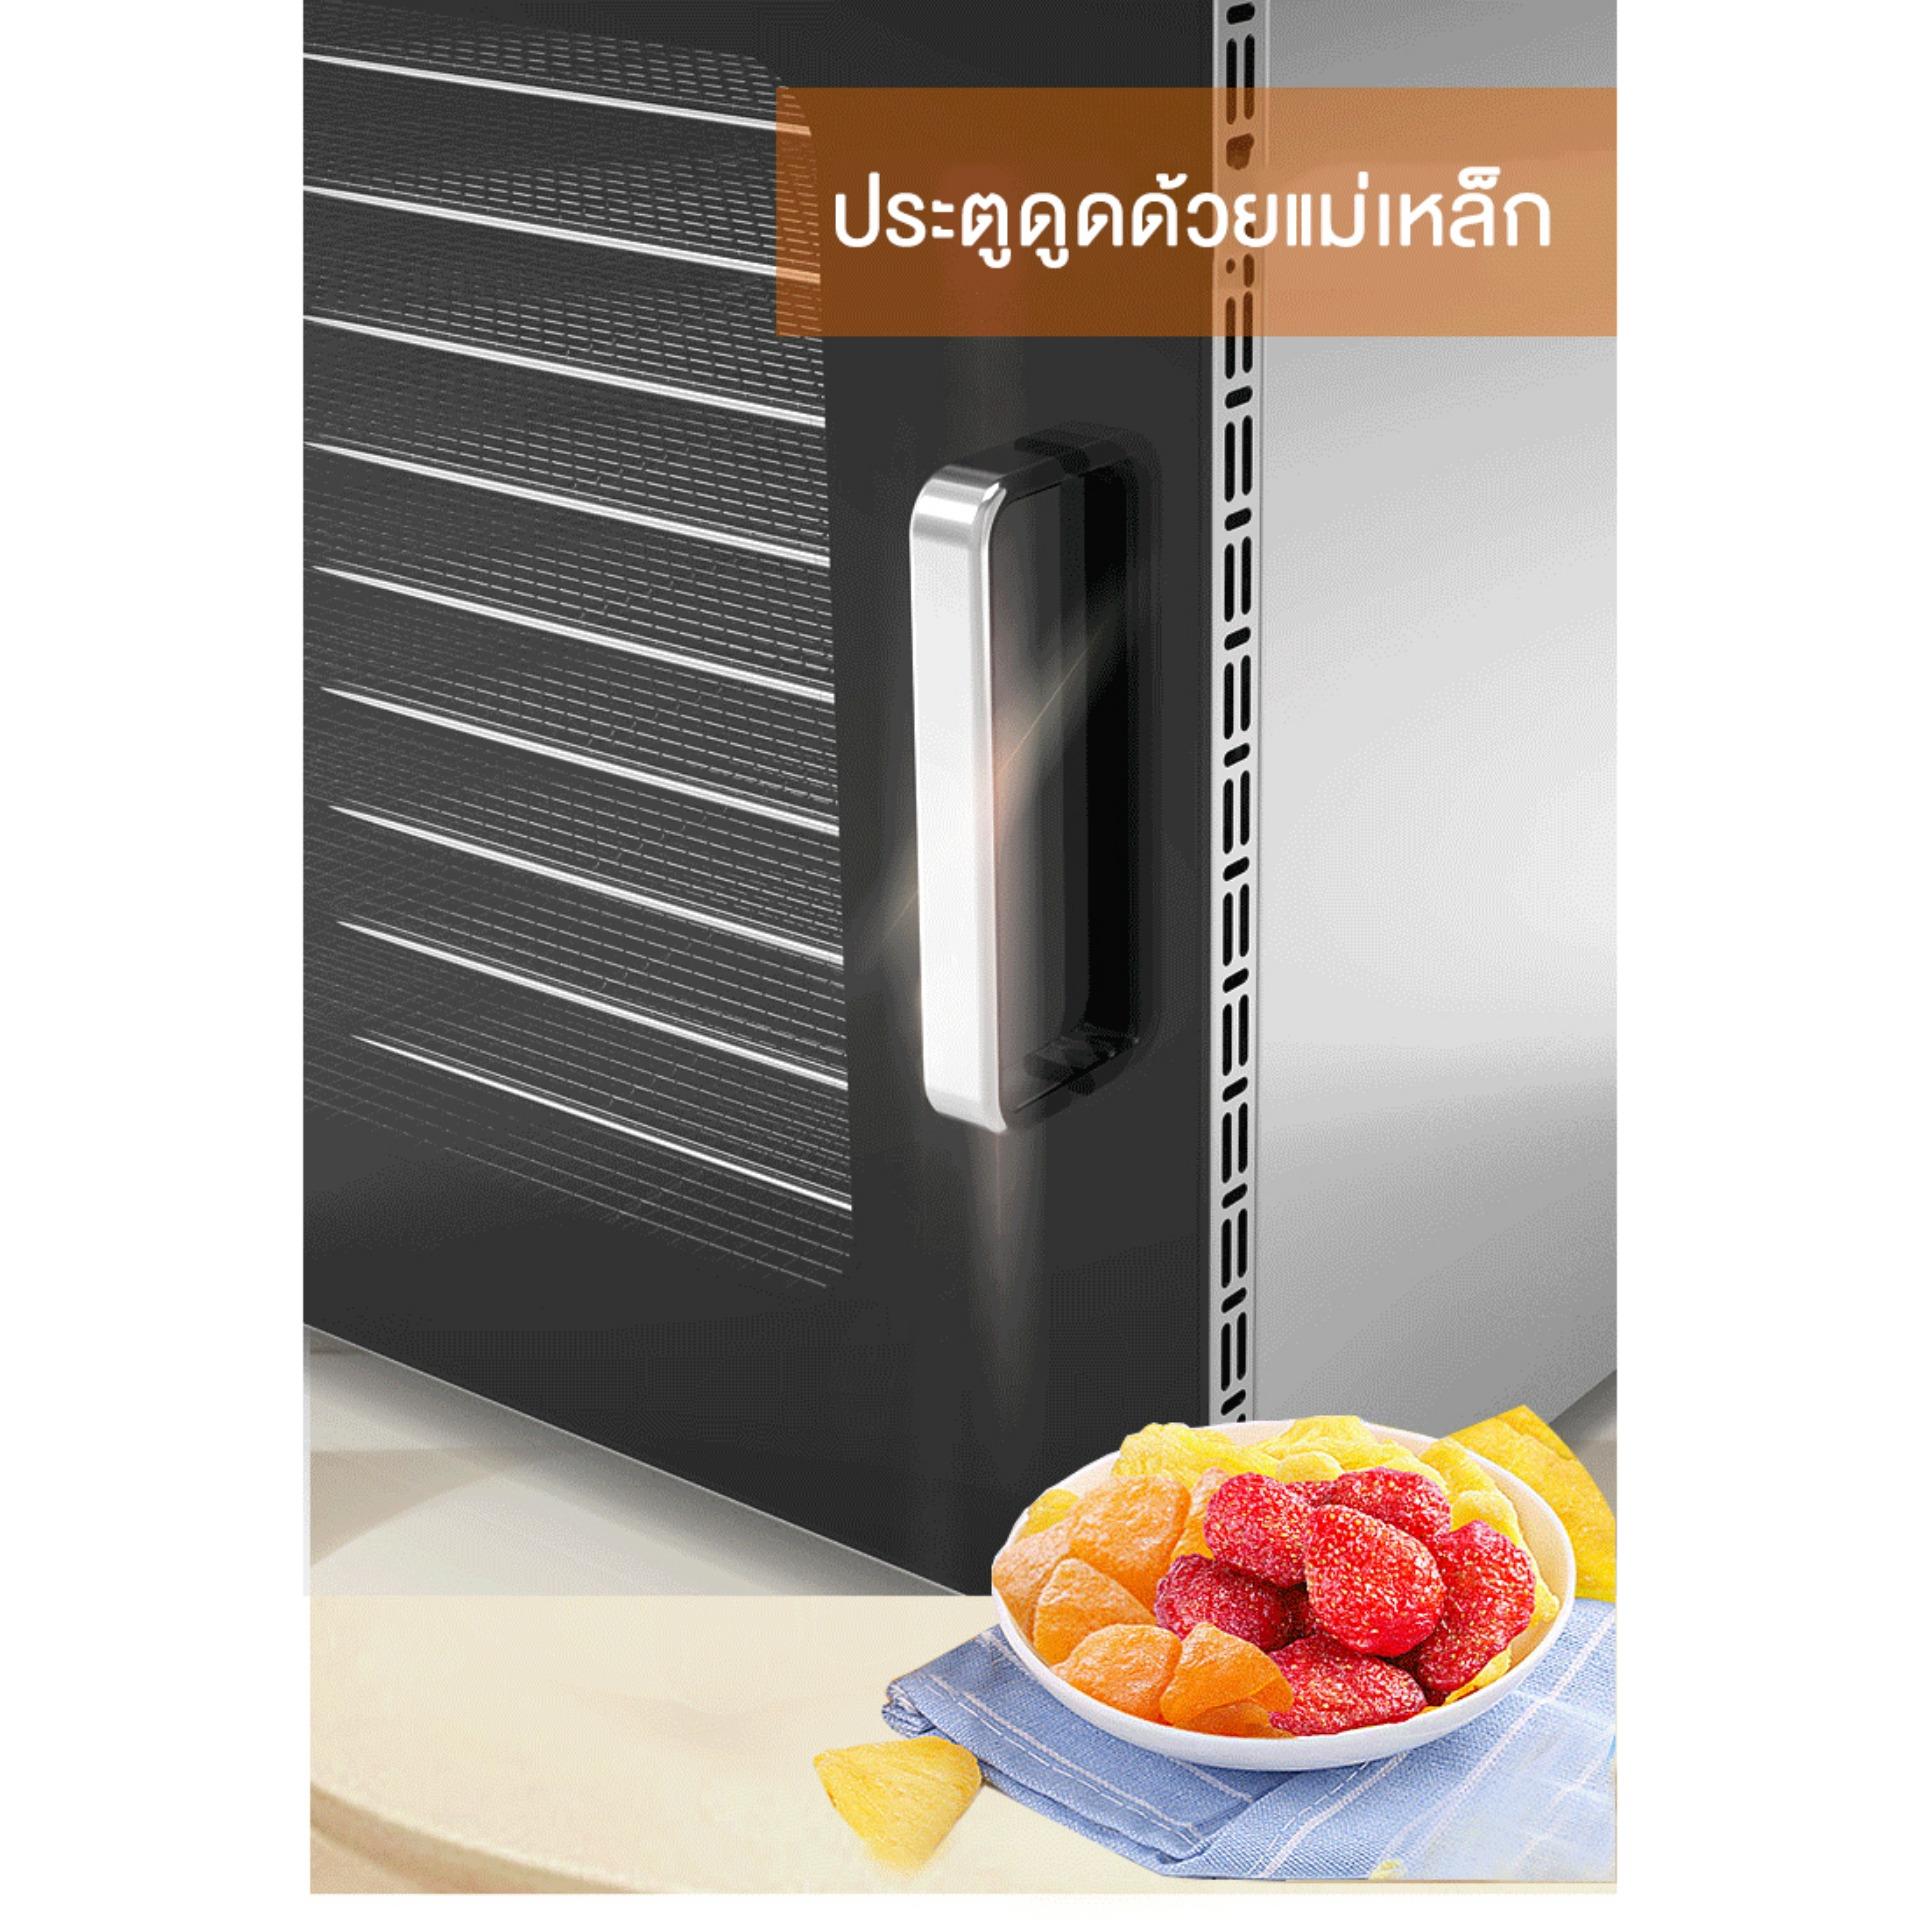 SHANBEN  เครื่องอบผลไม้ รุ่นใหม่ จุได้เยอะ Household fruit dryer fruit and vegetable soluble bean food air dryer commercial bacon mango 16 ชั้น และน้องเล็ก 6 ชั้น